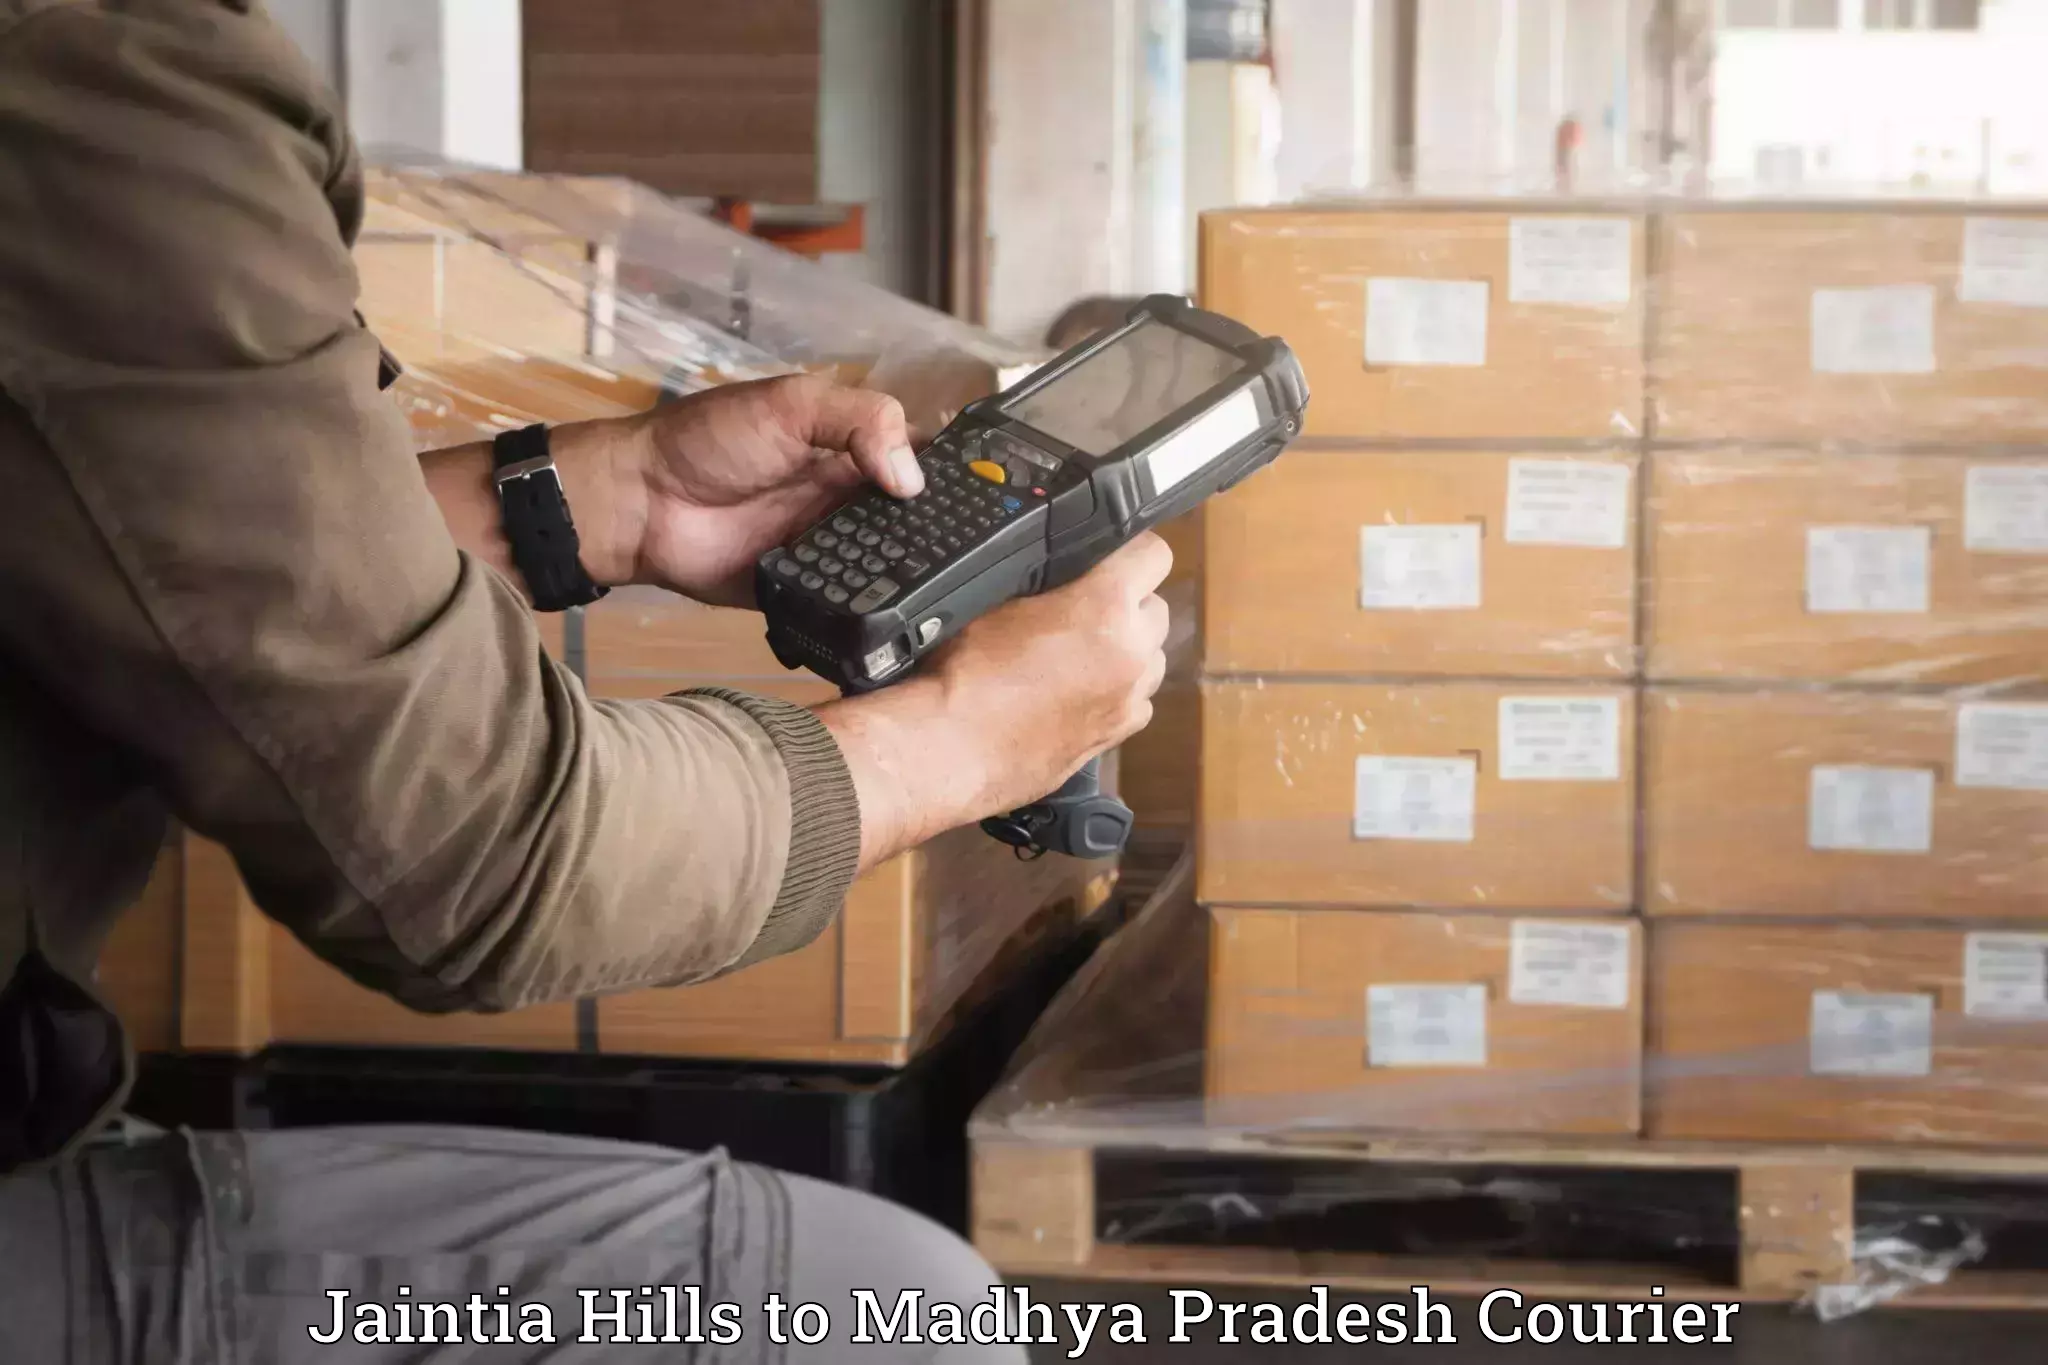 Moving and packing experts Jaintia Hills to Raipur Karchuliyan